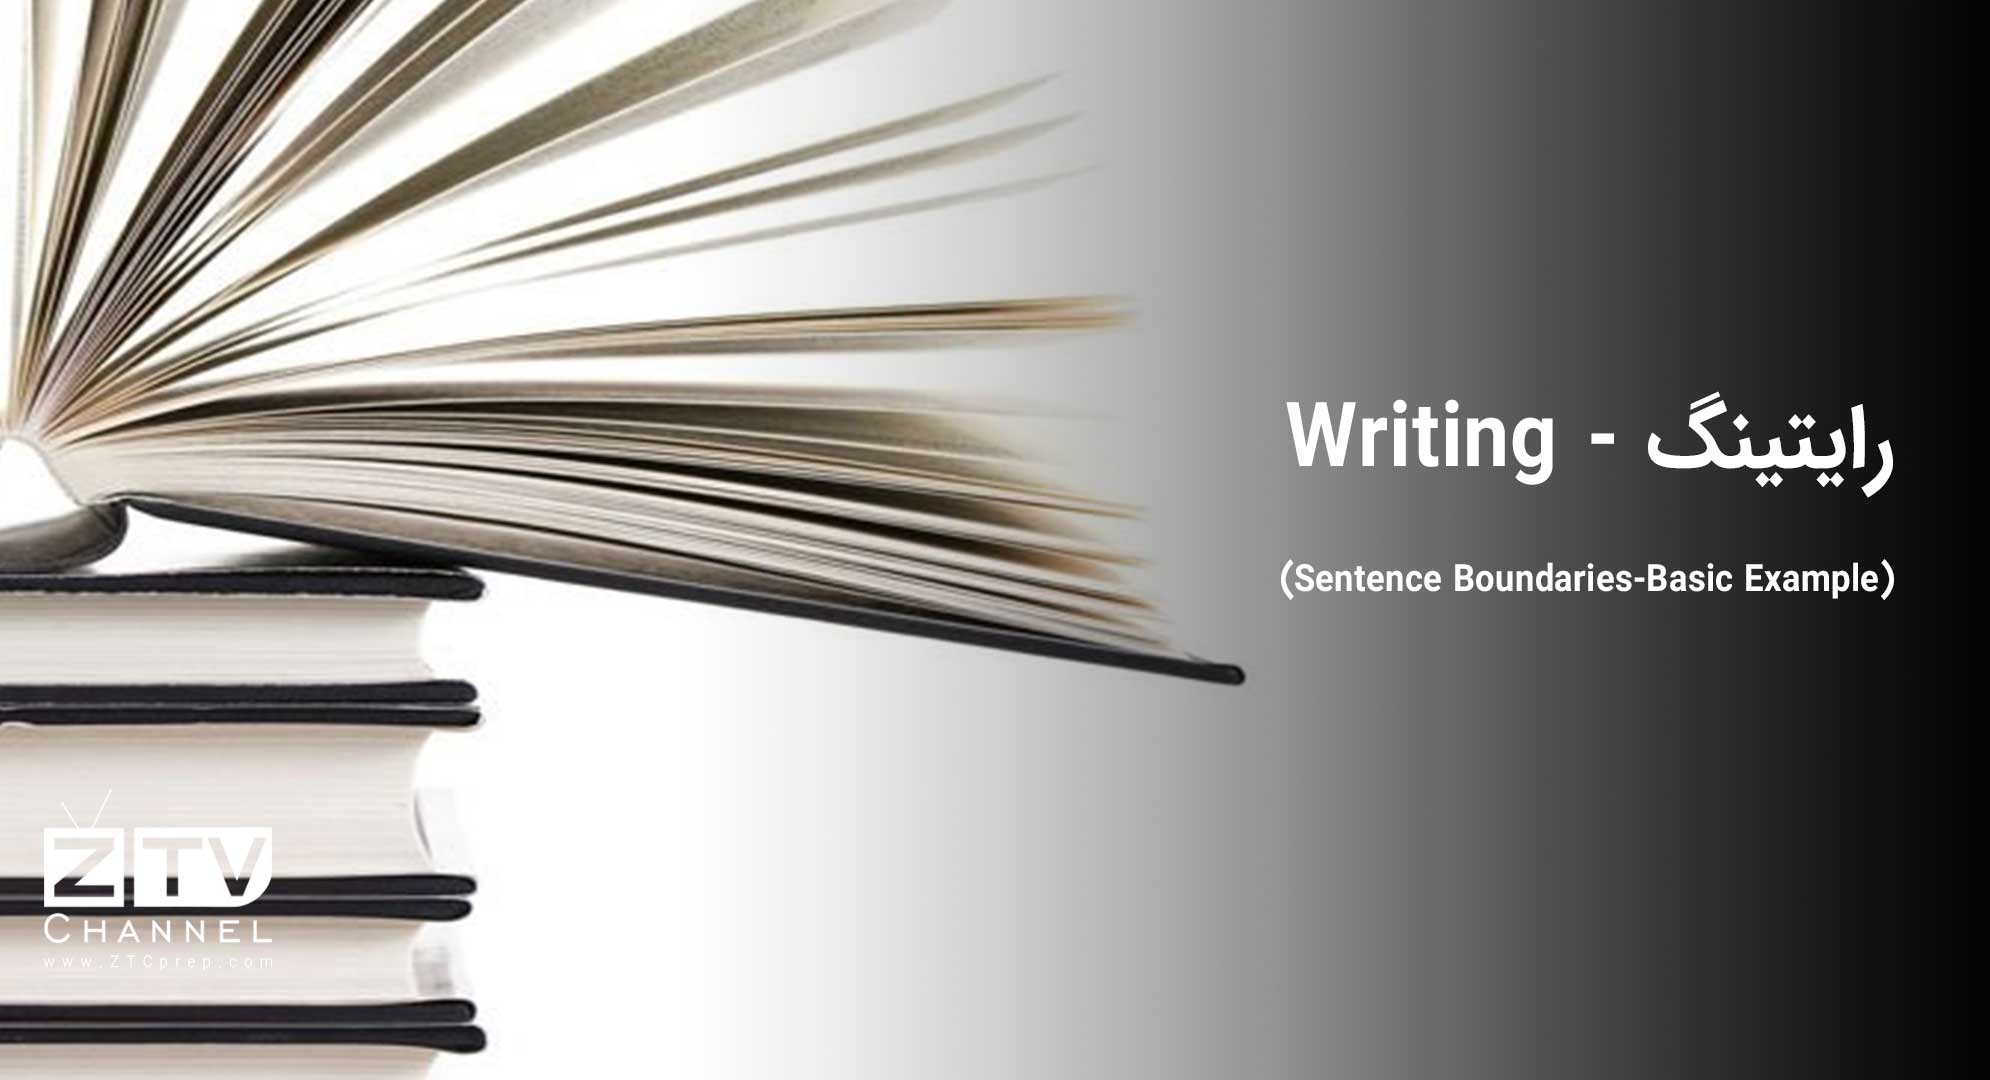 رایتینگ - (Writing (Sentence Boundaries-Basic Example